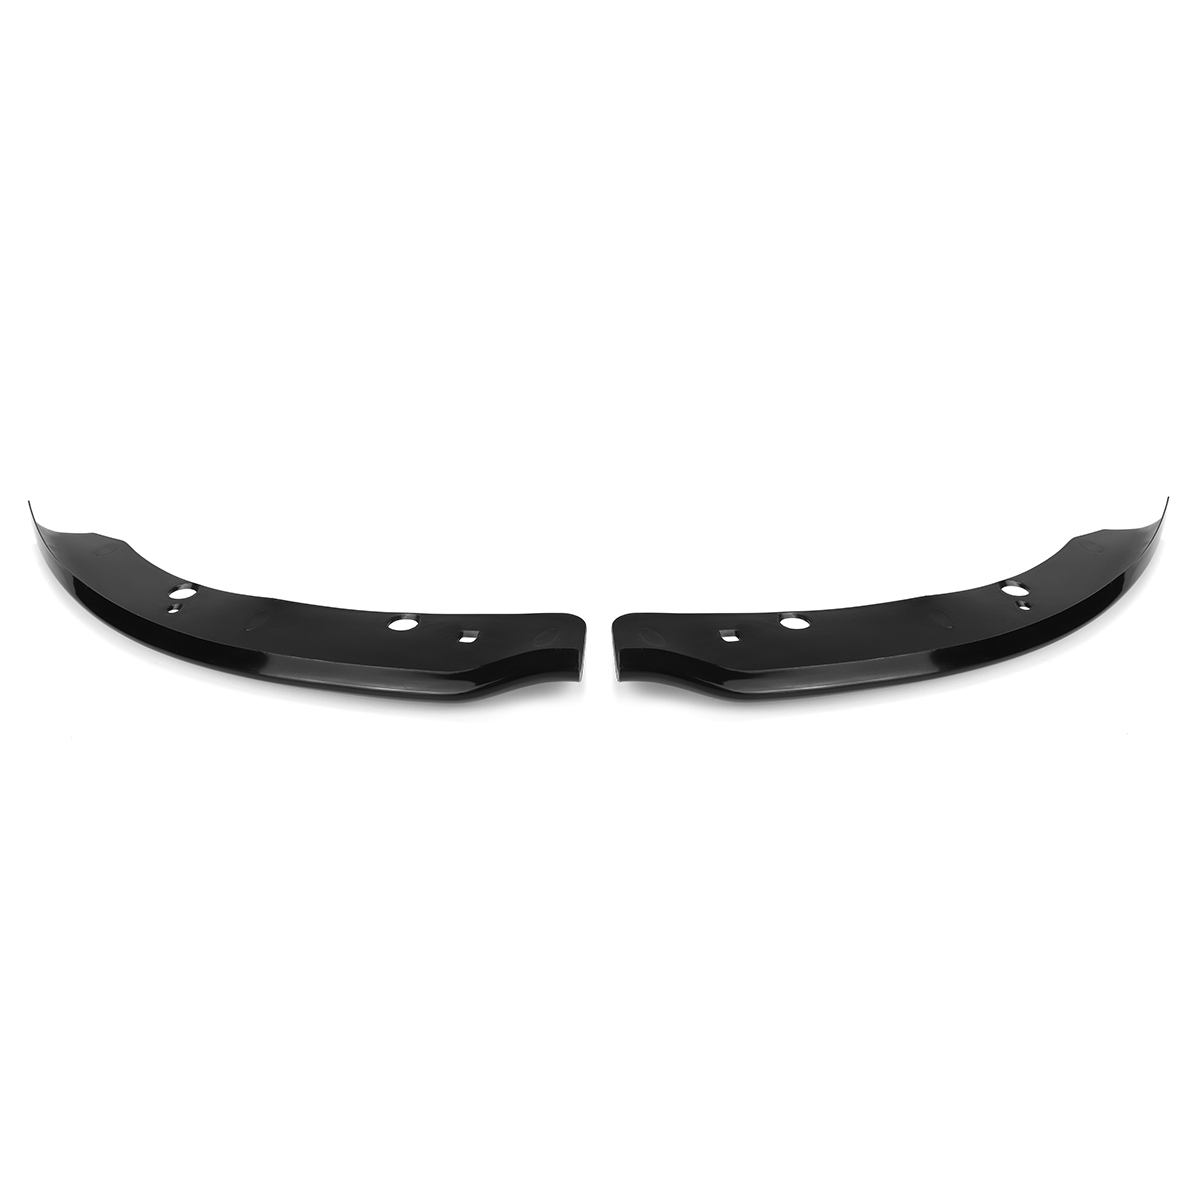 Protector separador de labios de parachoques delantero negro para Dodge Charger SRT Scat Pack 2015-2019